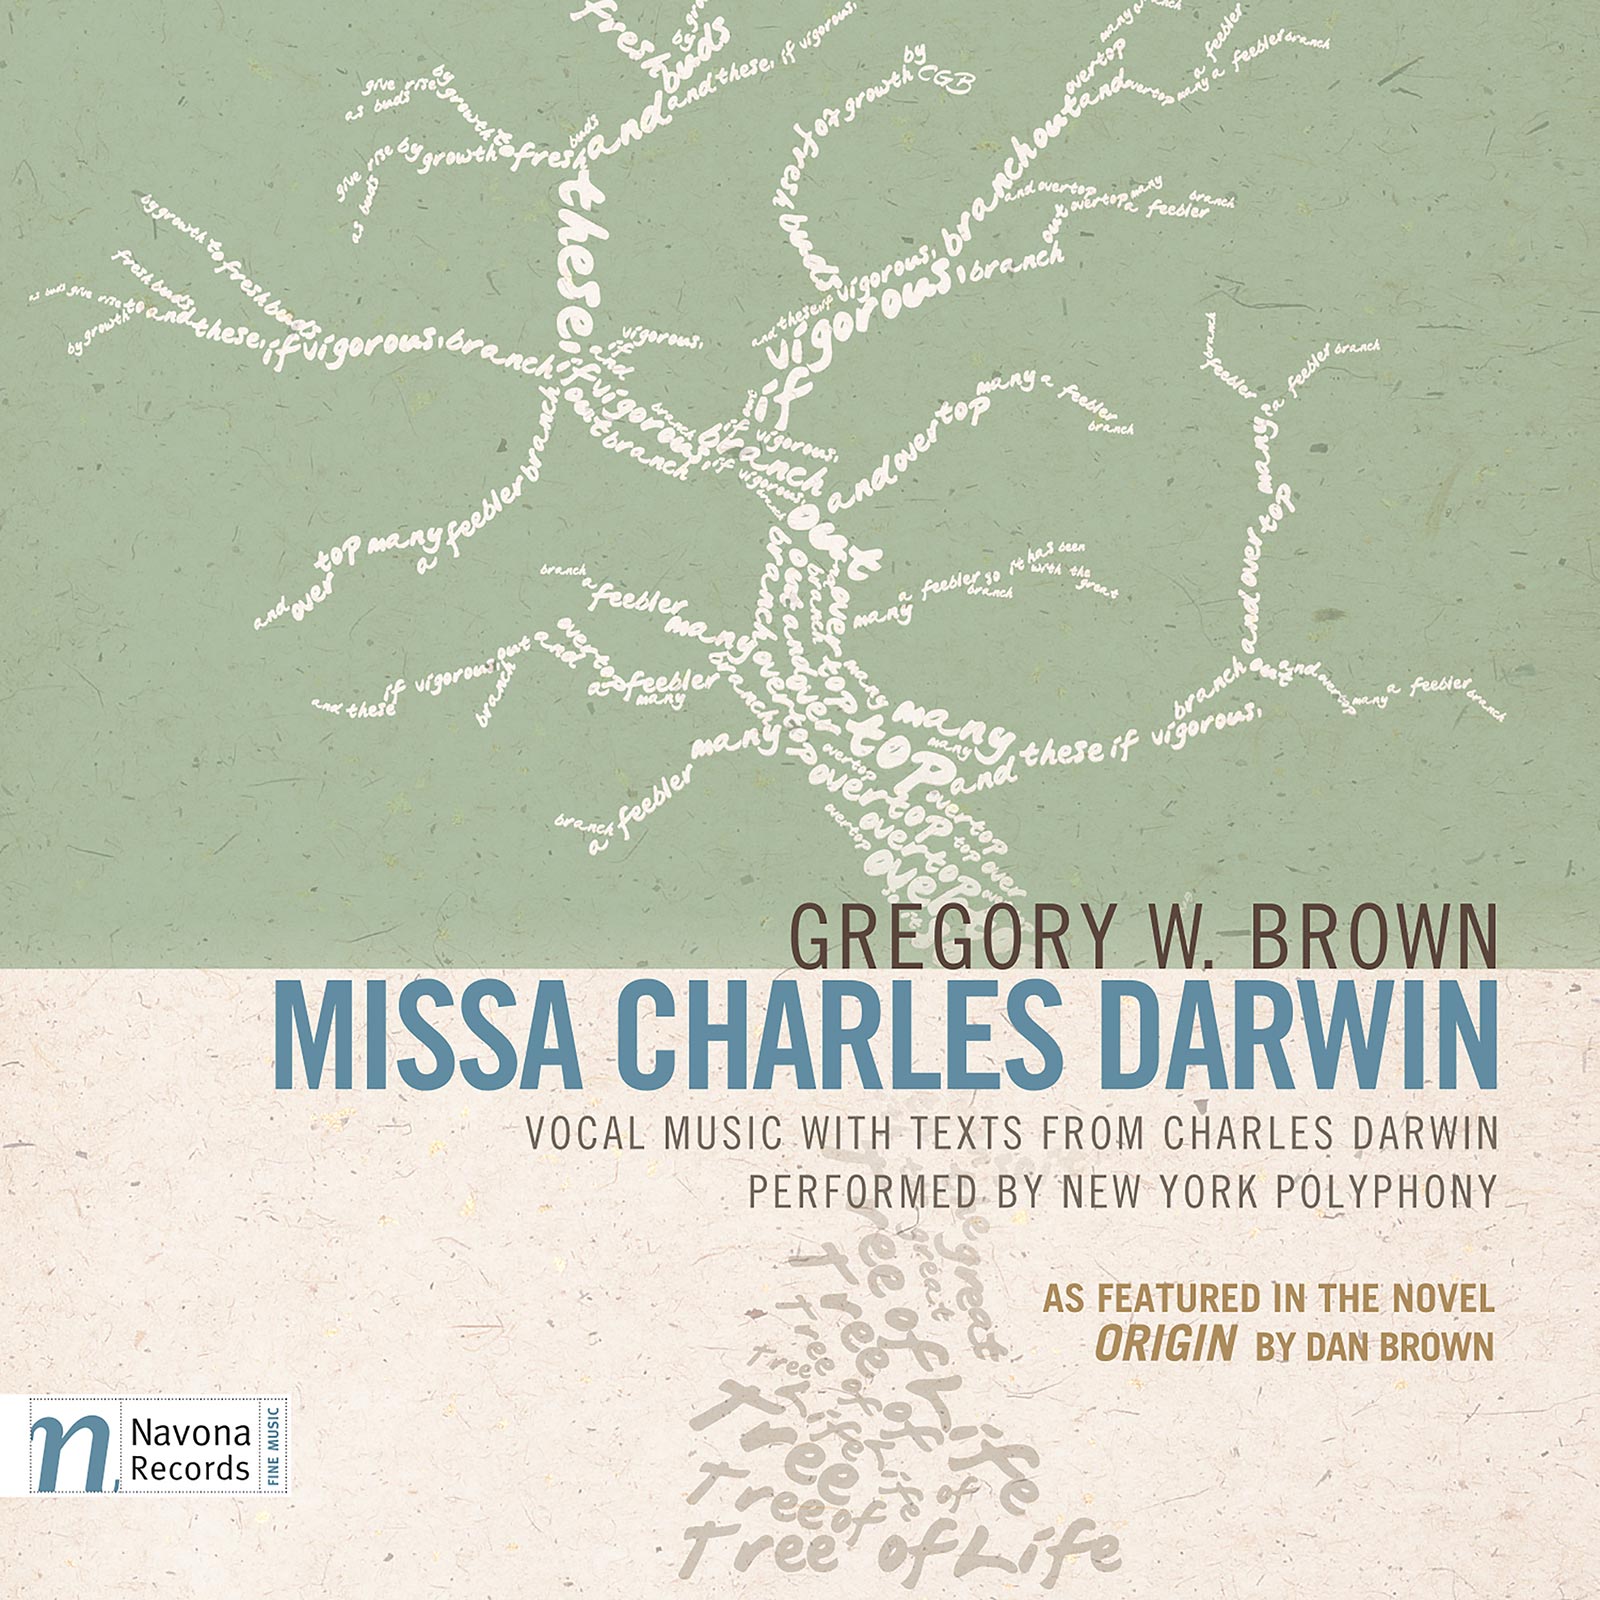 MISSA CHARLES DARWIN - Album Cover